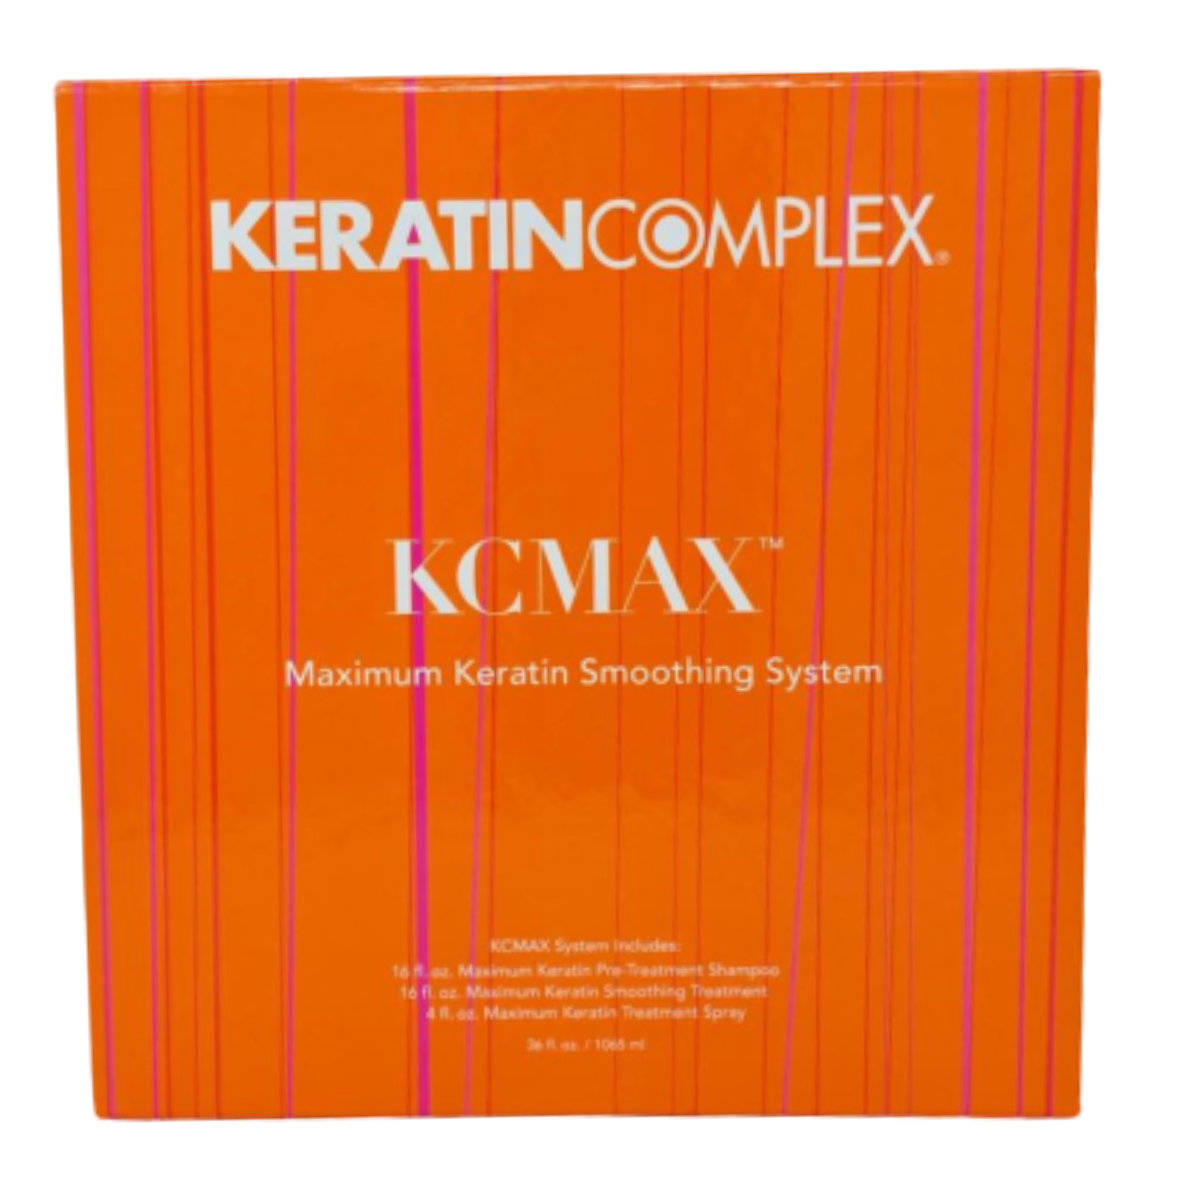 Keratin Complex KCMAX Maximum Keratin Smoothing System 16 oz With Free Spray (6)